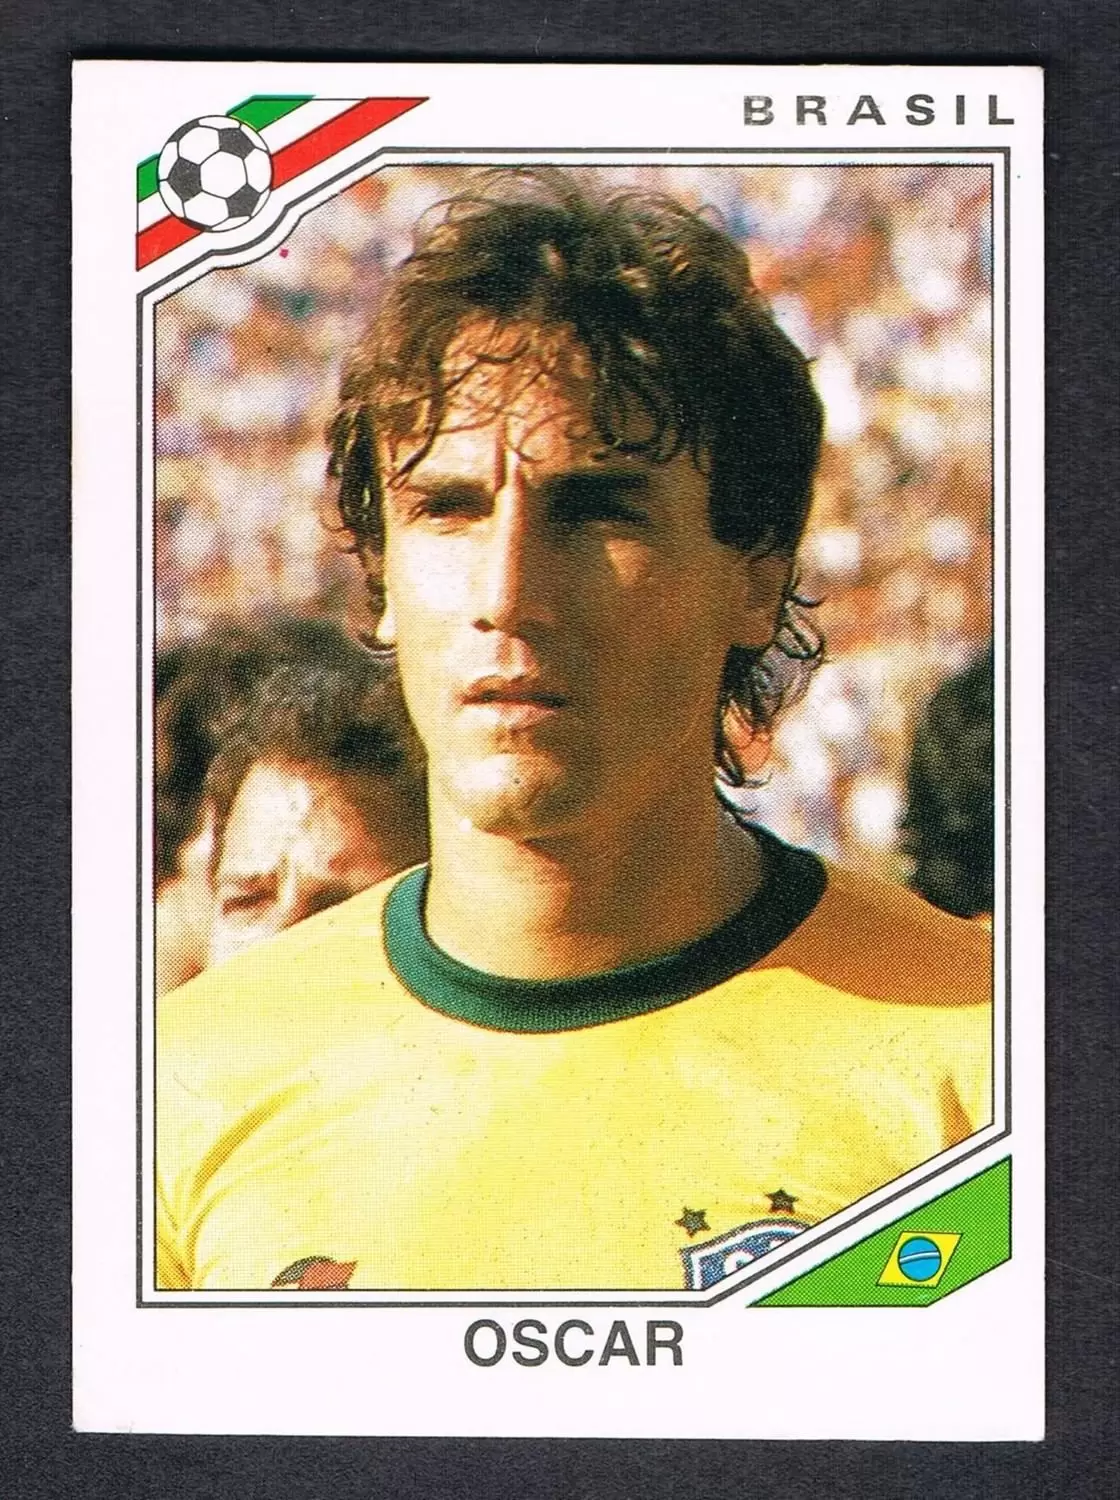 Mexico 86 World Cup - Jose Oscar Bernardi - Brésil